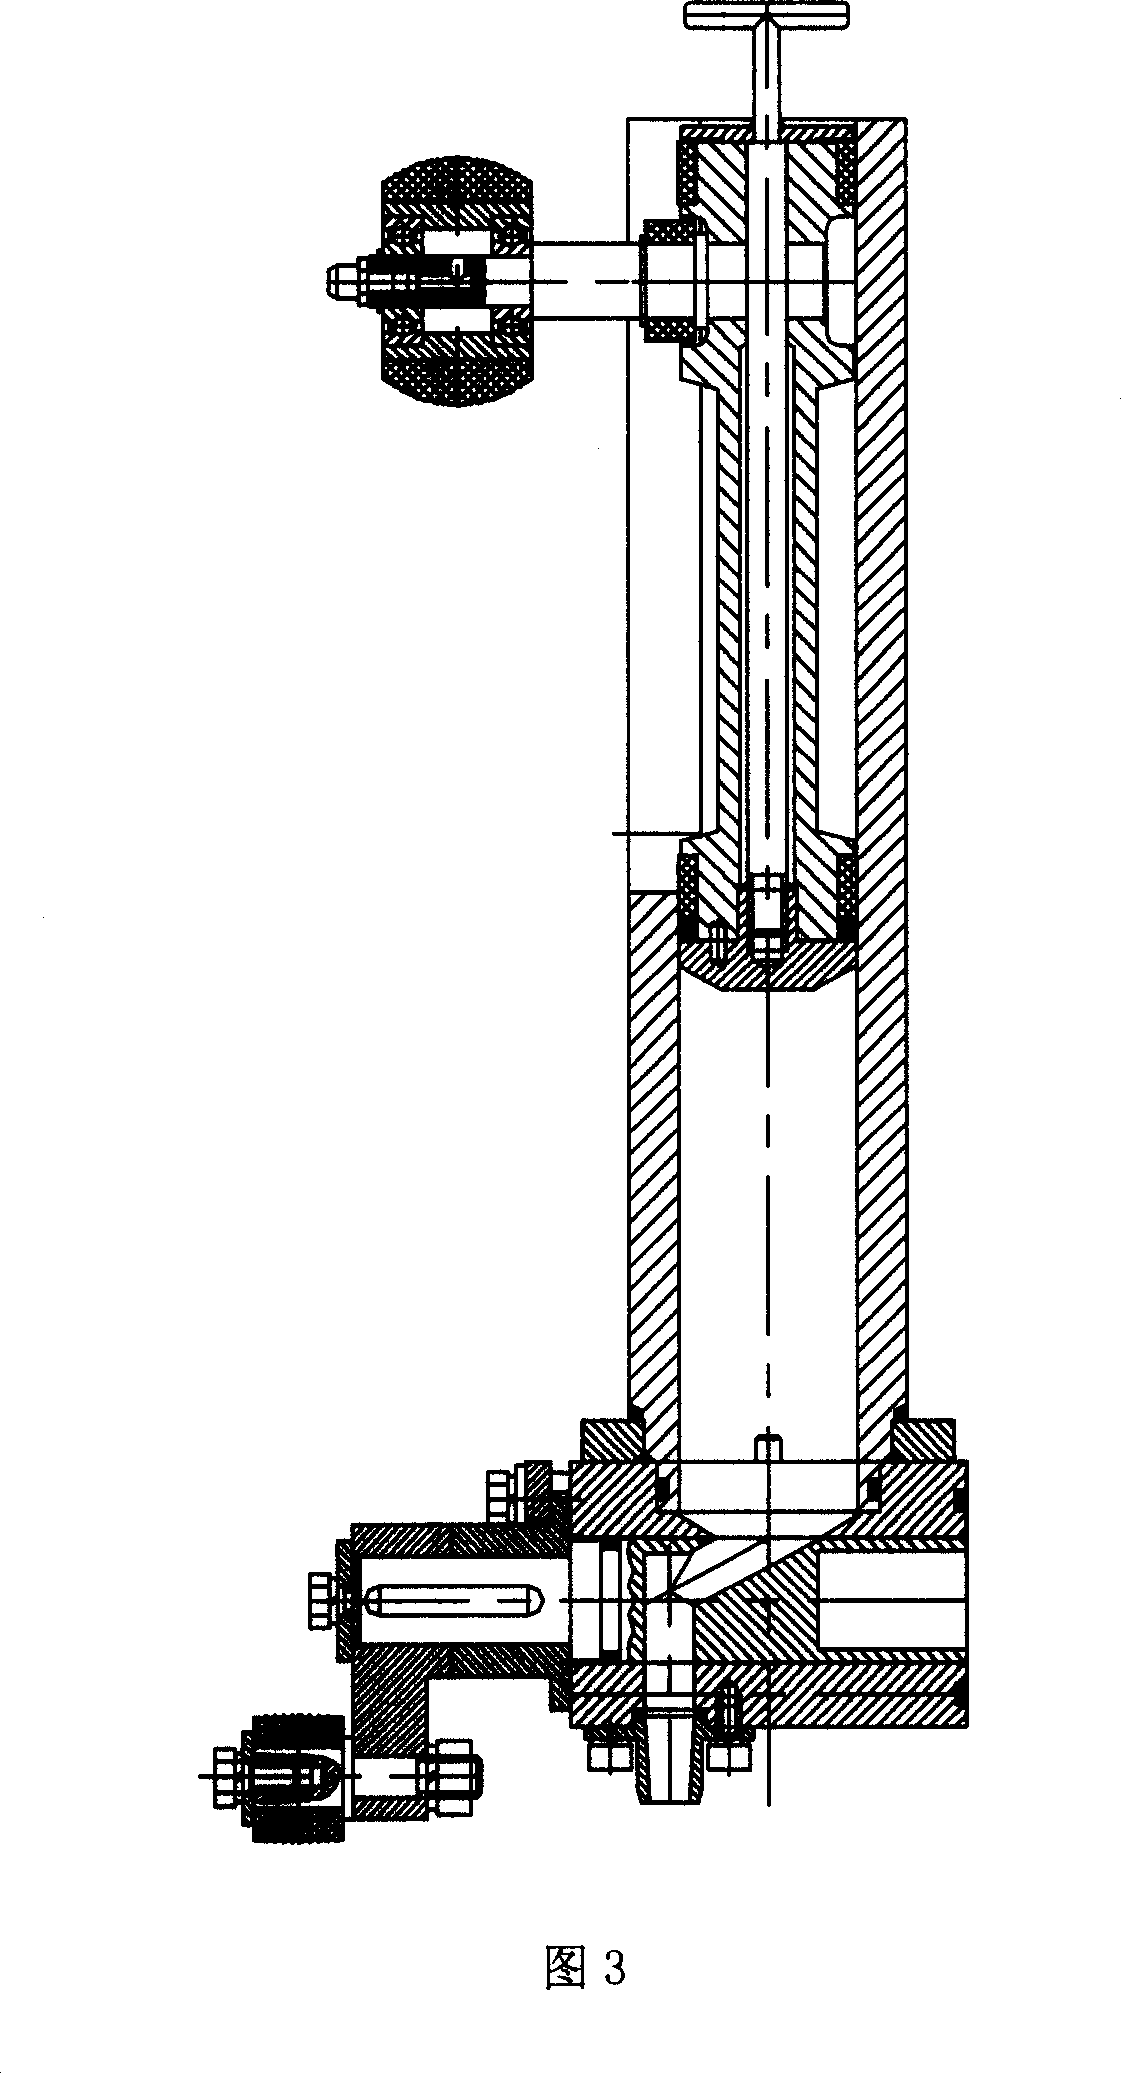 Plunger-type rationing filling valve